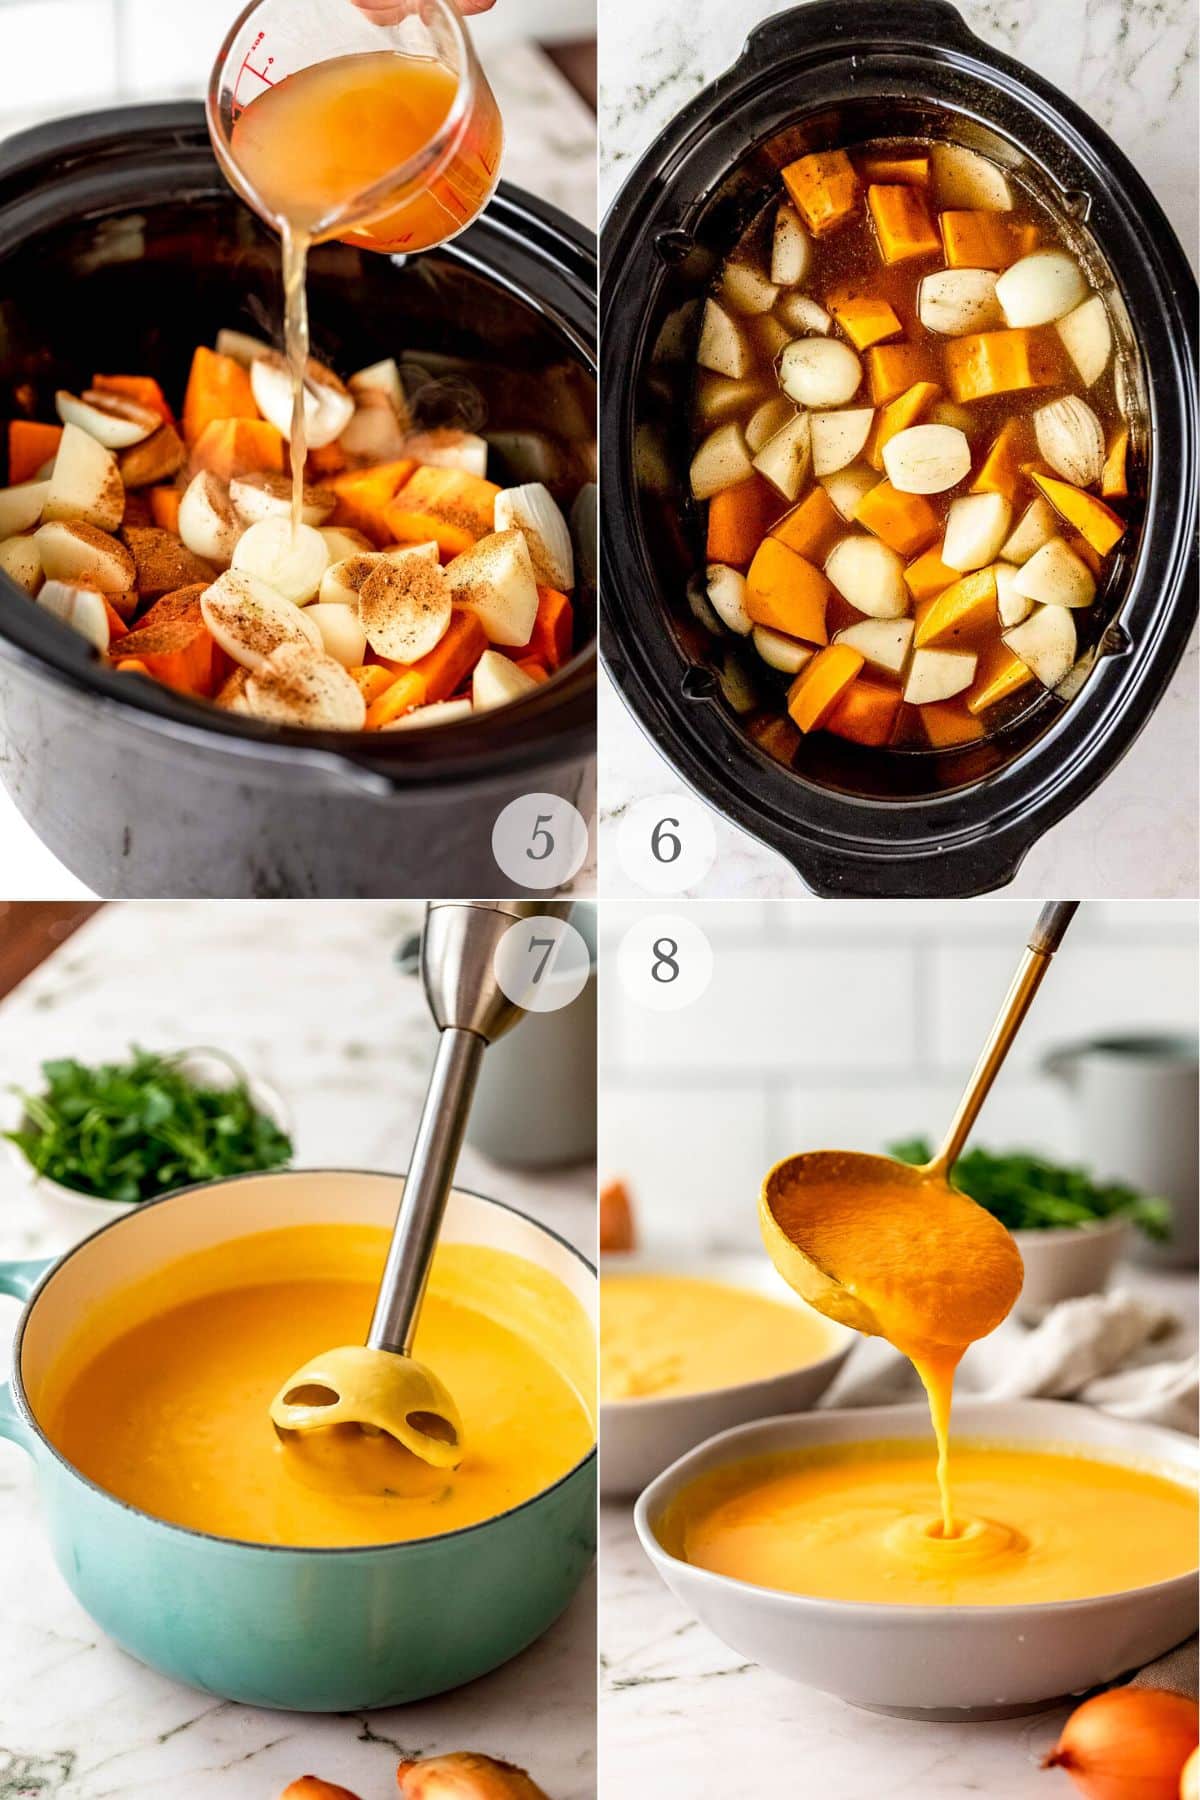 slow cooker pumpkin soup recipe steps 5-8.